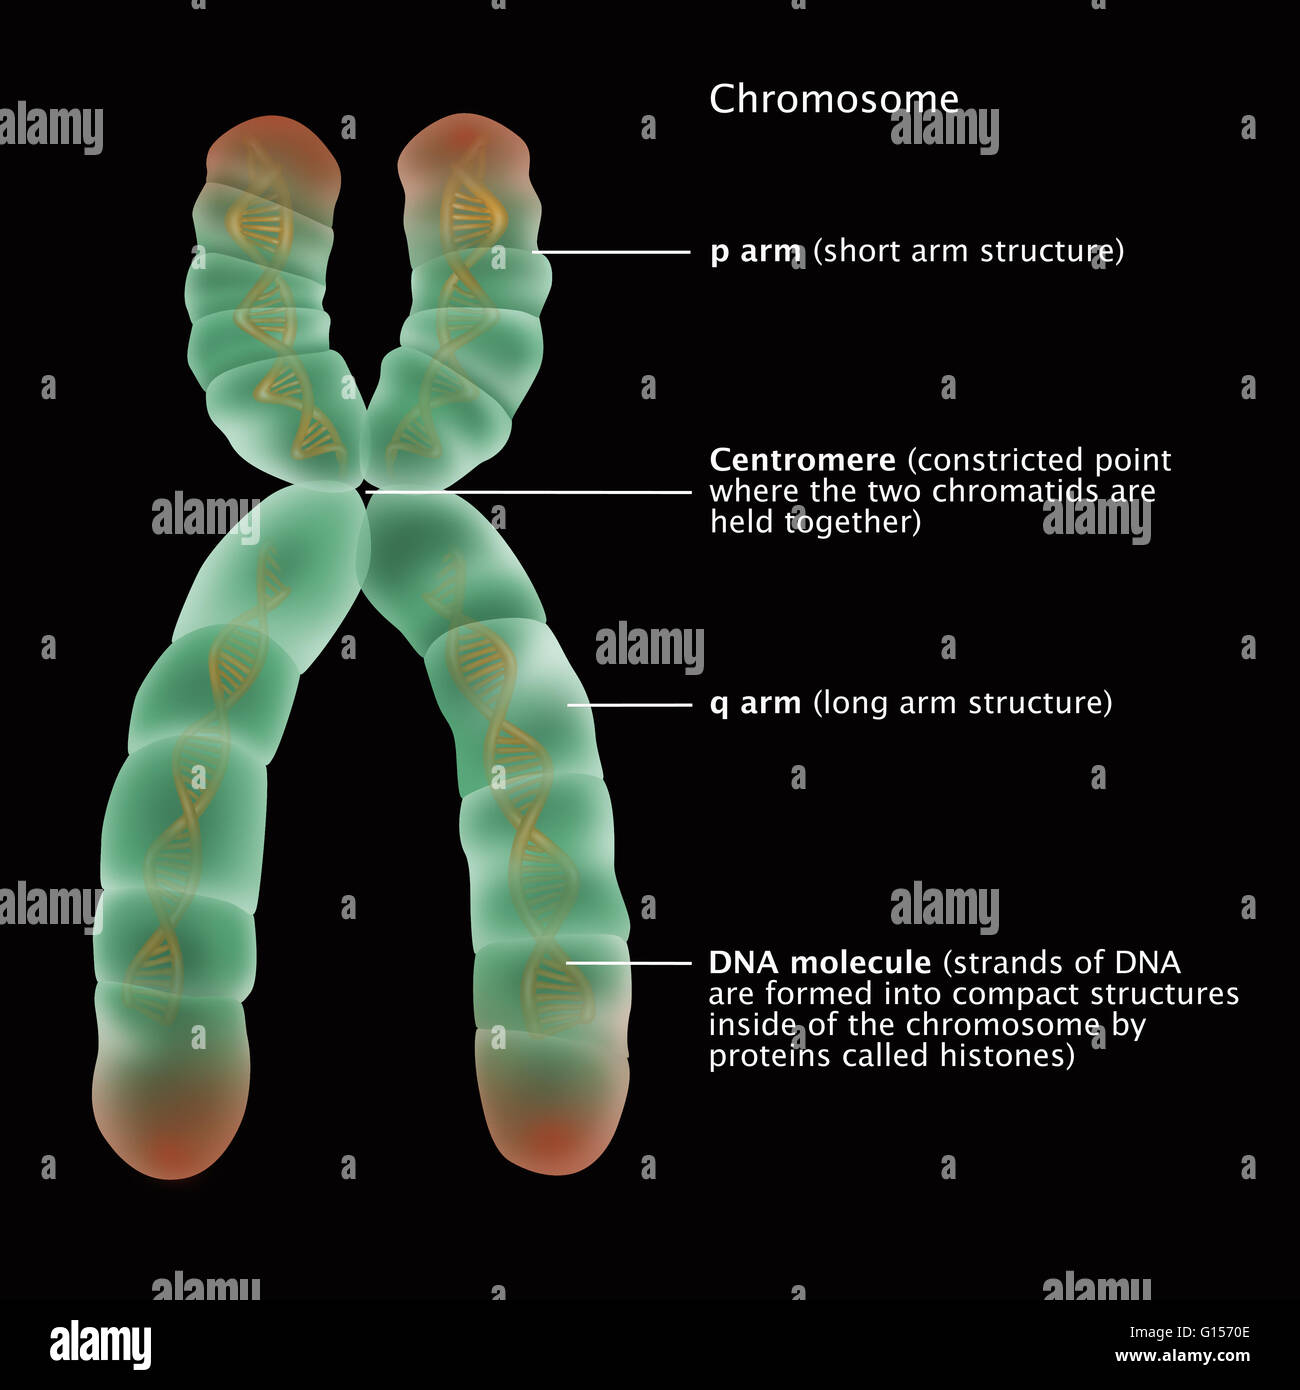 Х хромосома это мужская. Хромосома. Chromosome structure. P В хромосомах. ДНК И хромосомы.